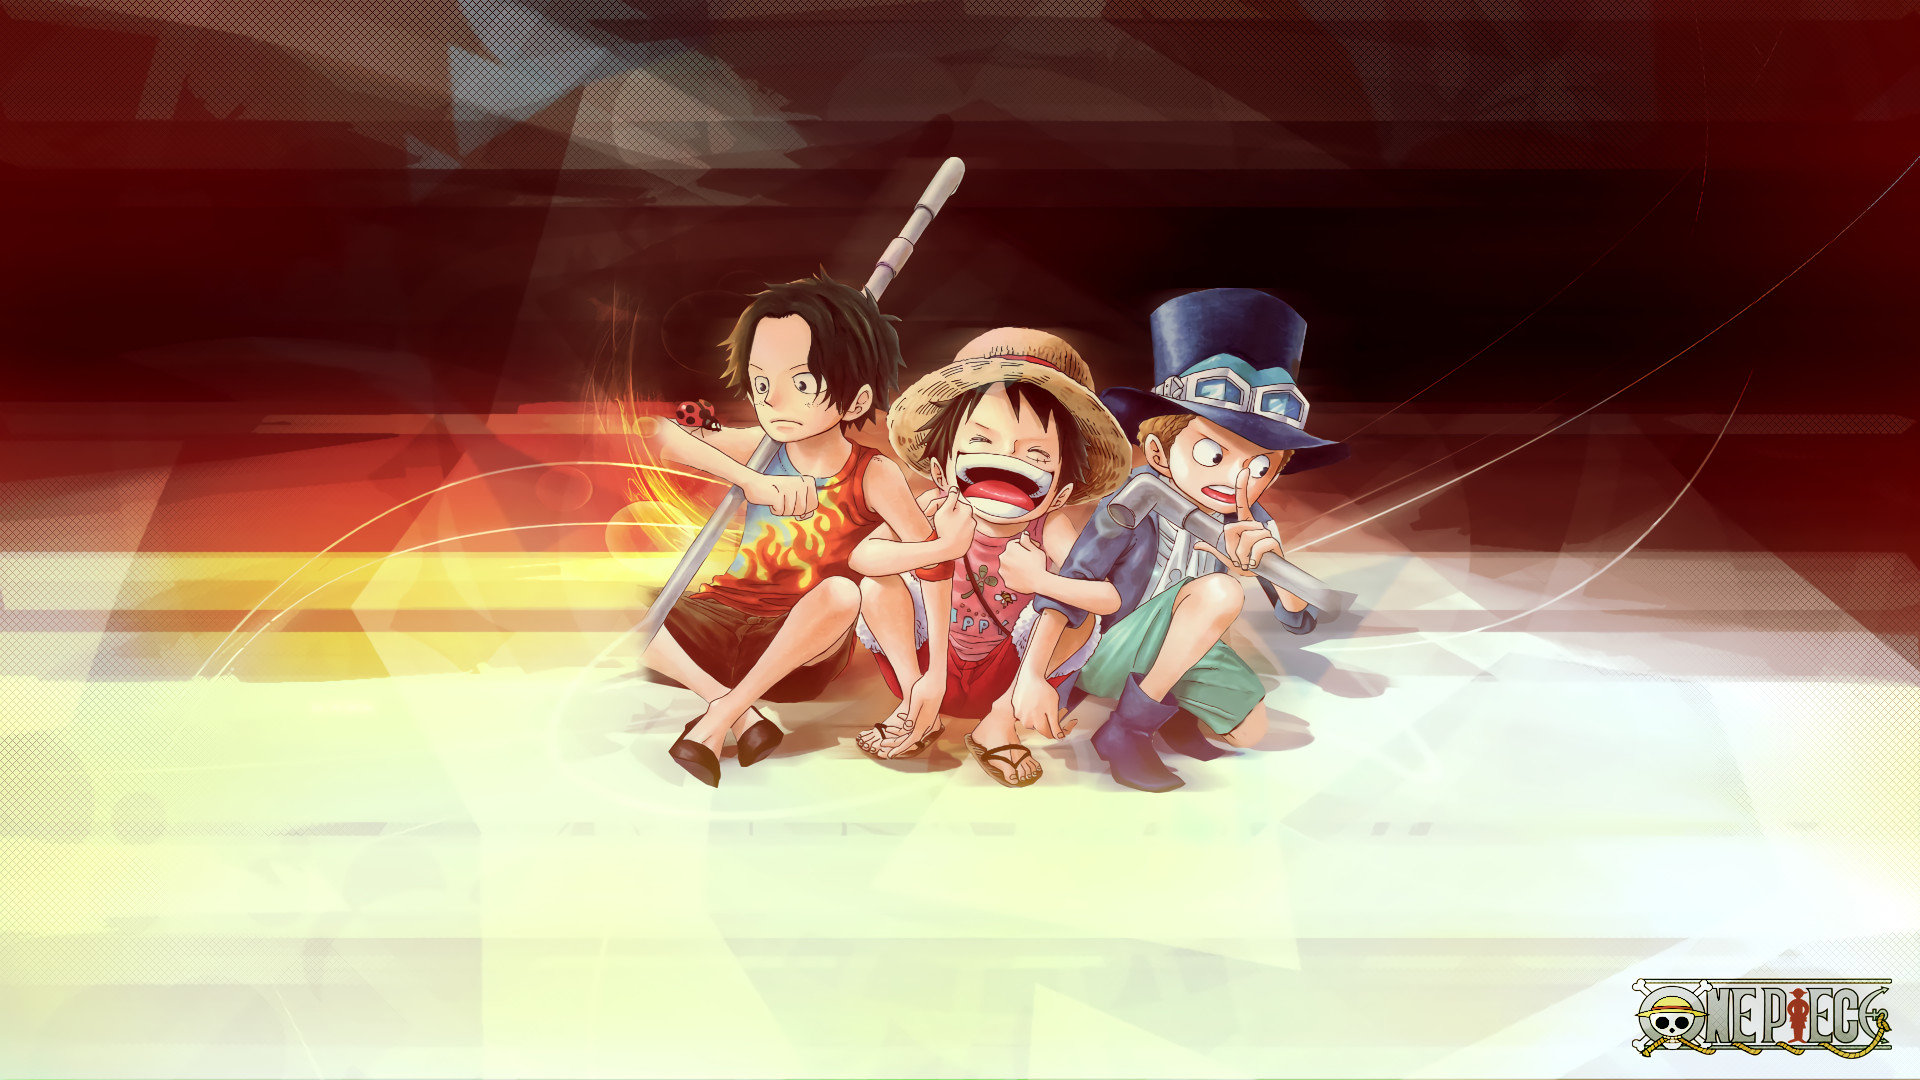 Sabo (One Piece) wallpaper HD for desktop background